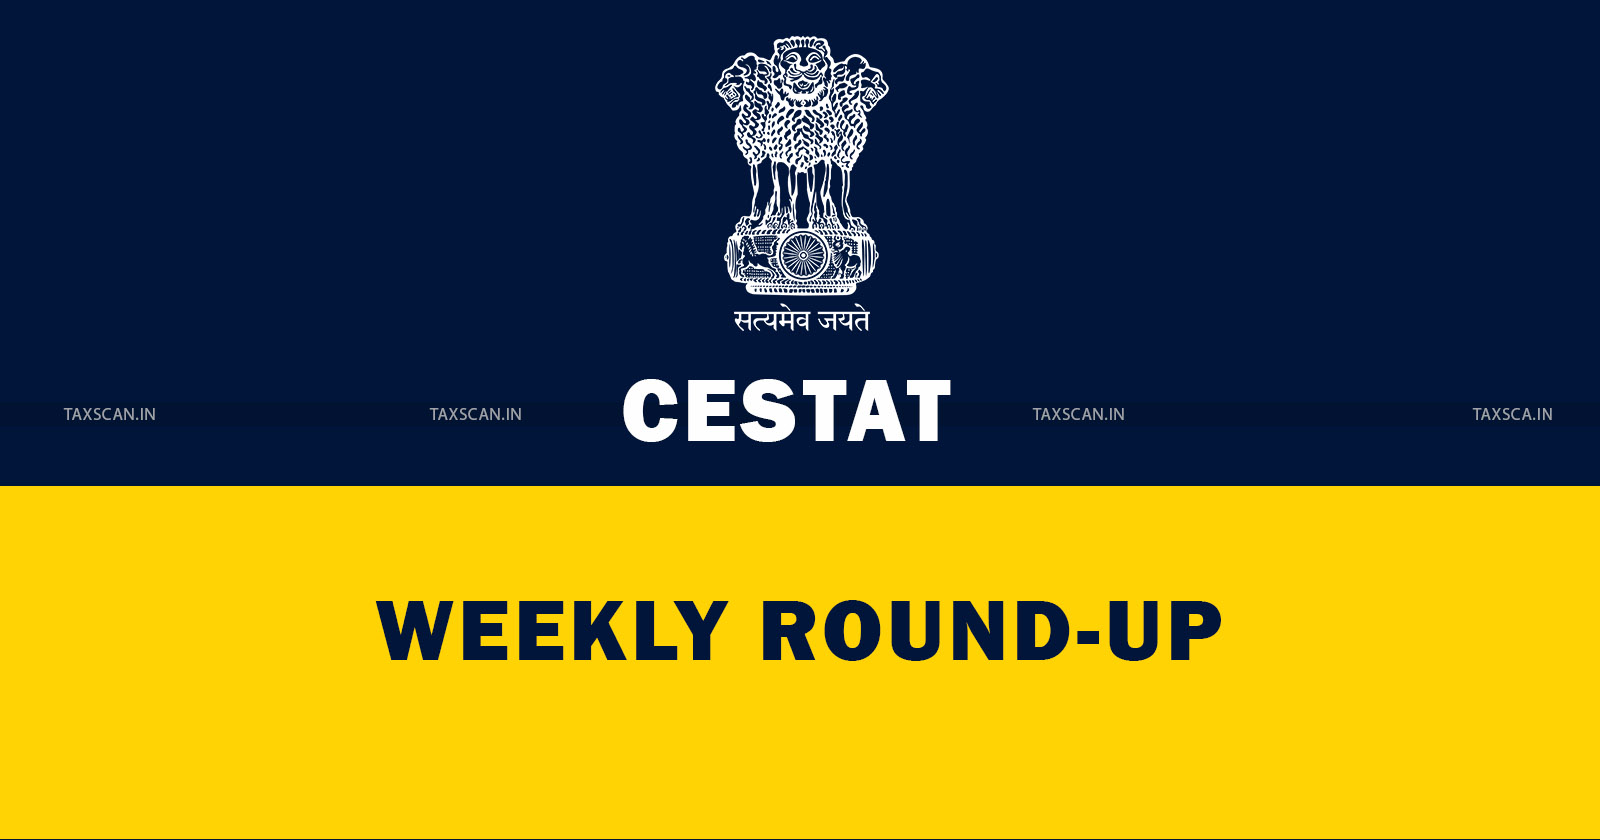 CESTAT Weekly Round Up - CESTAT news - Taxscan CESTAT roundup - CESTAT - taxscan